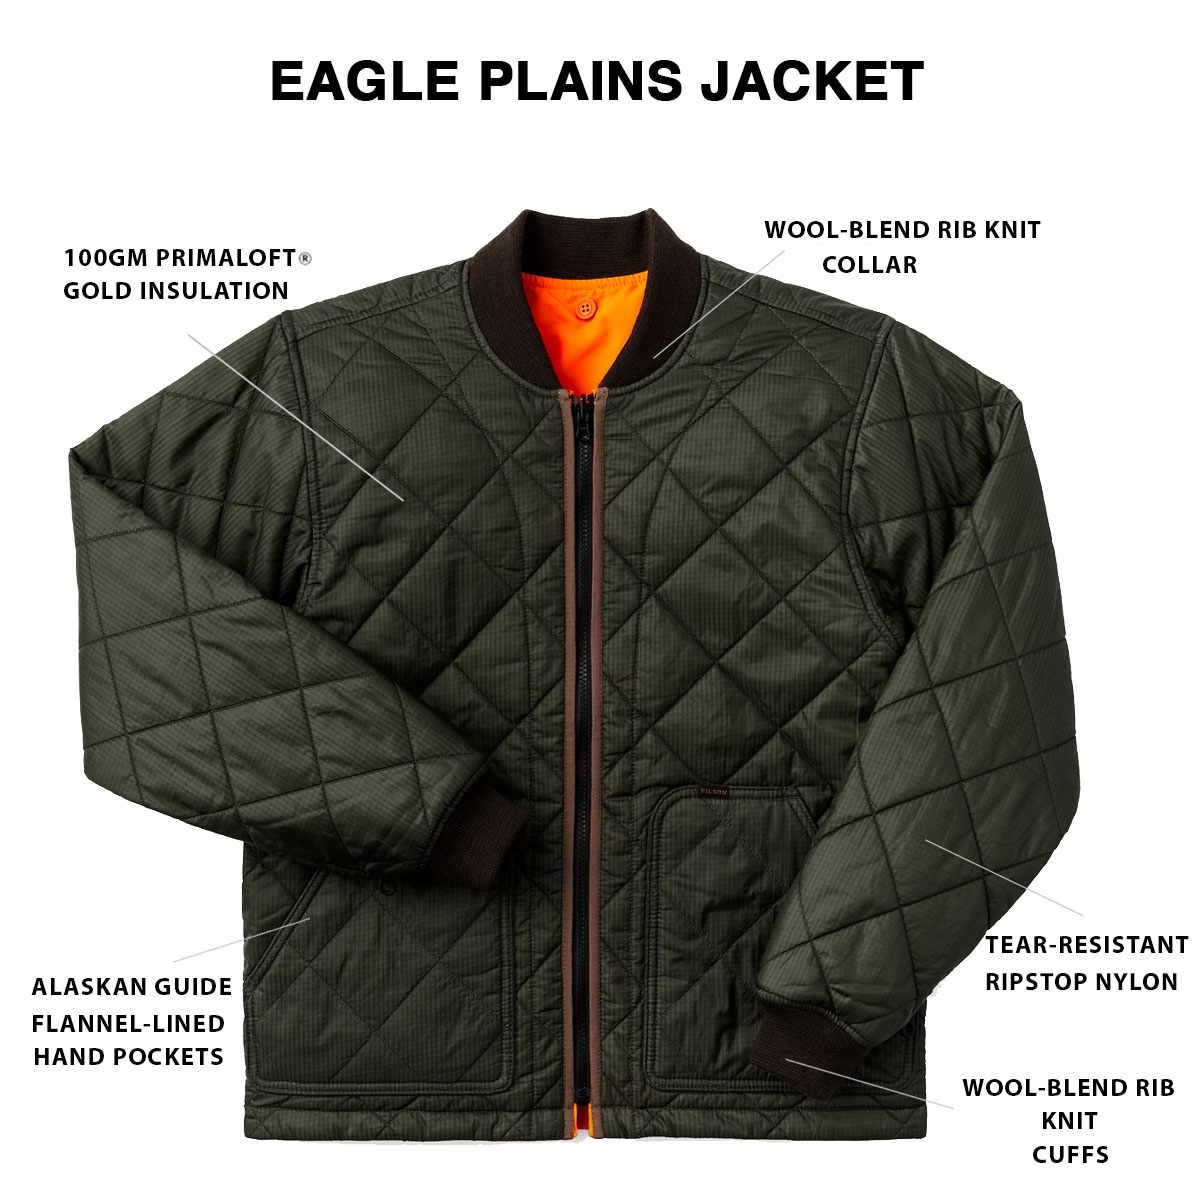 Filson Eagle Plains Jacket Liner Surplus Green Blaze, lichtgewicht jas met uitzonderlijke warmte-gewichtsverhouding